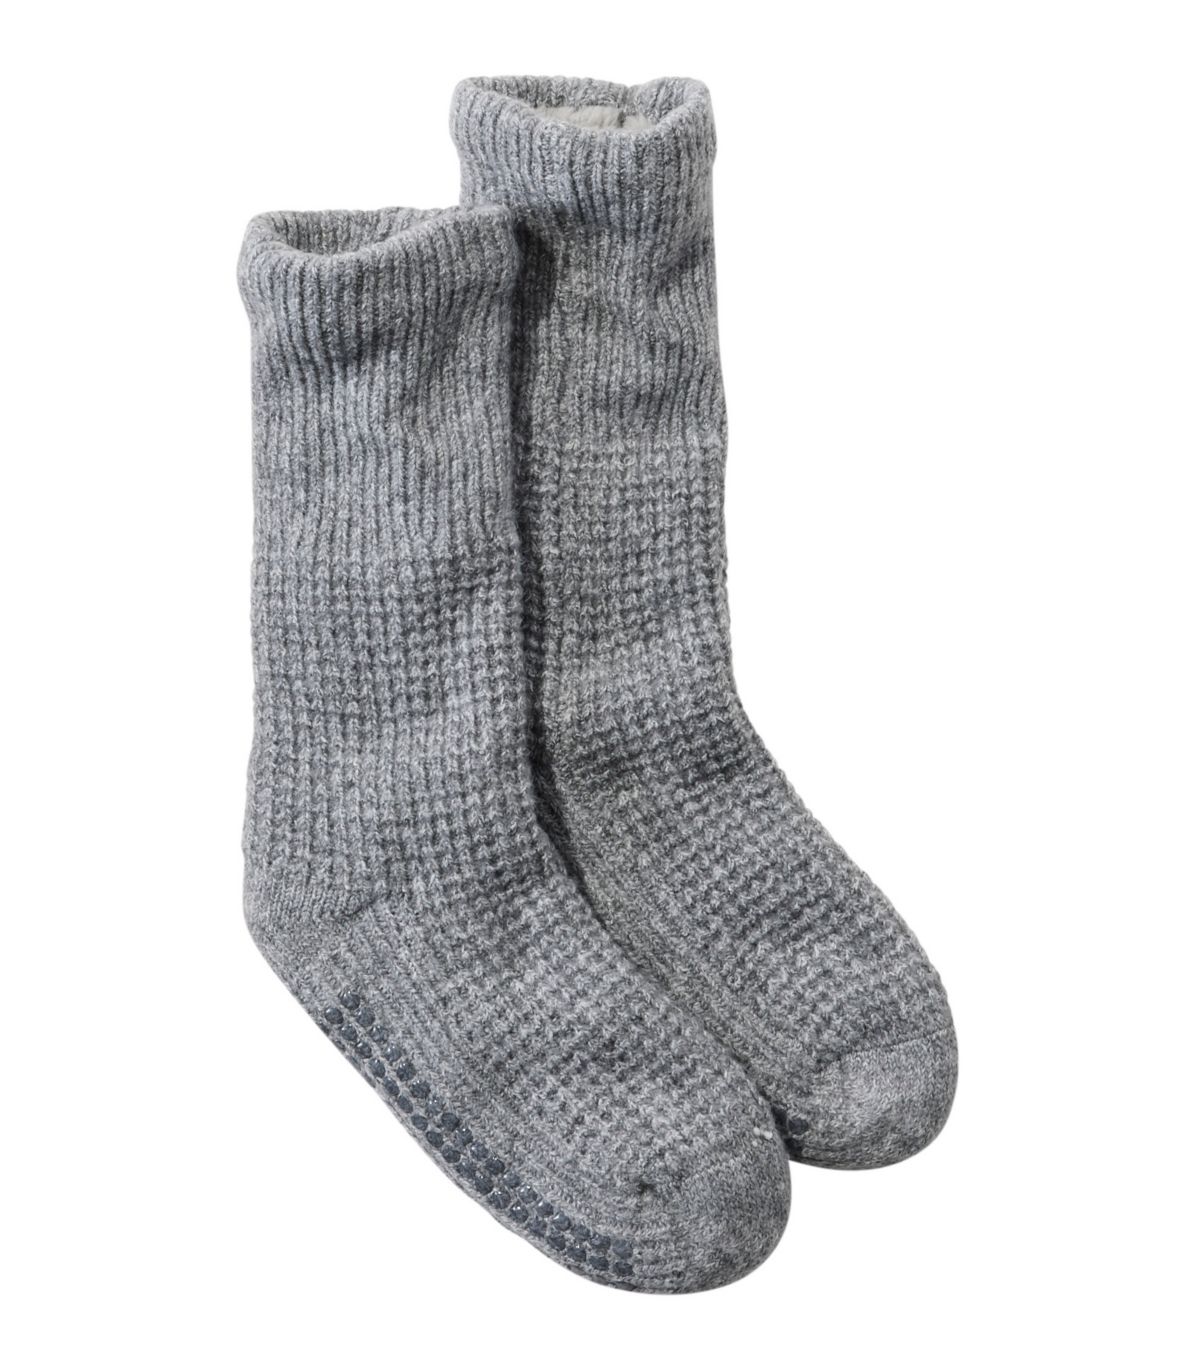 Adults' Wicked Cozy Socks